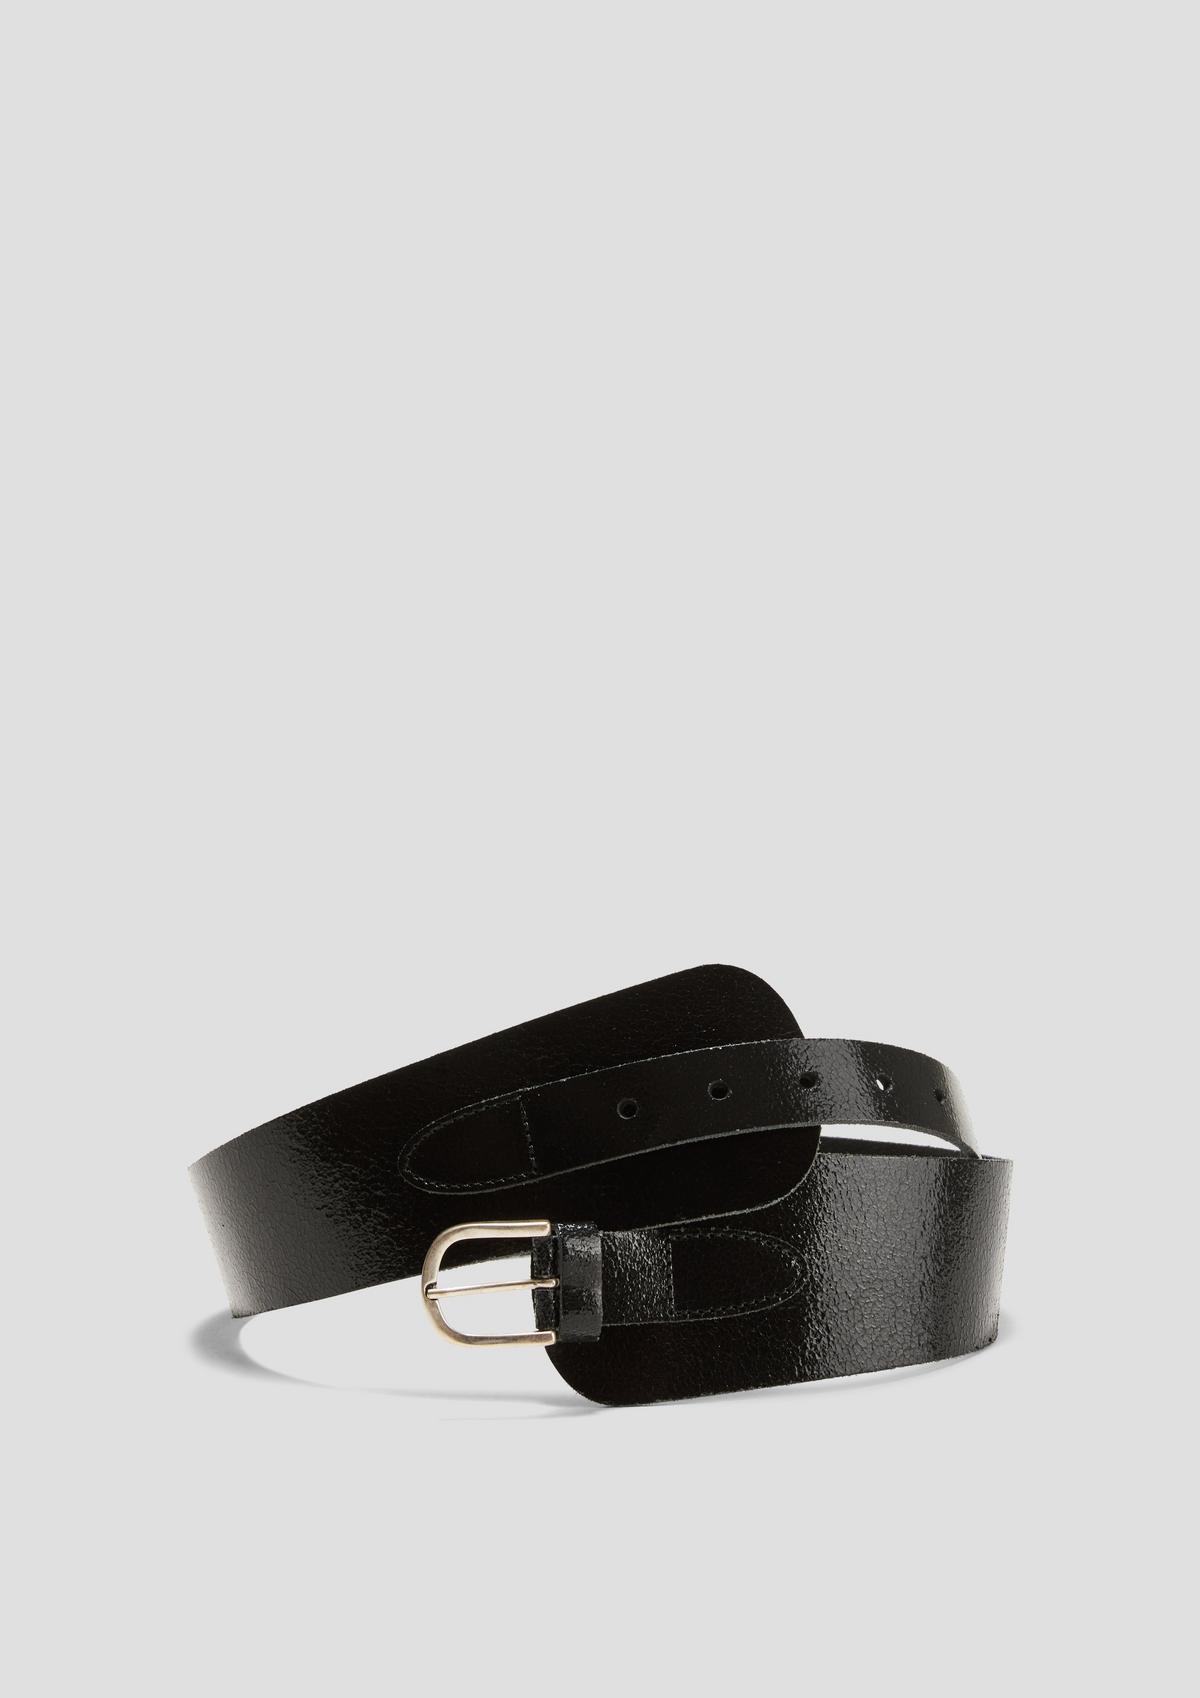 s.Oliver Patent leather belt